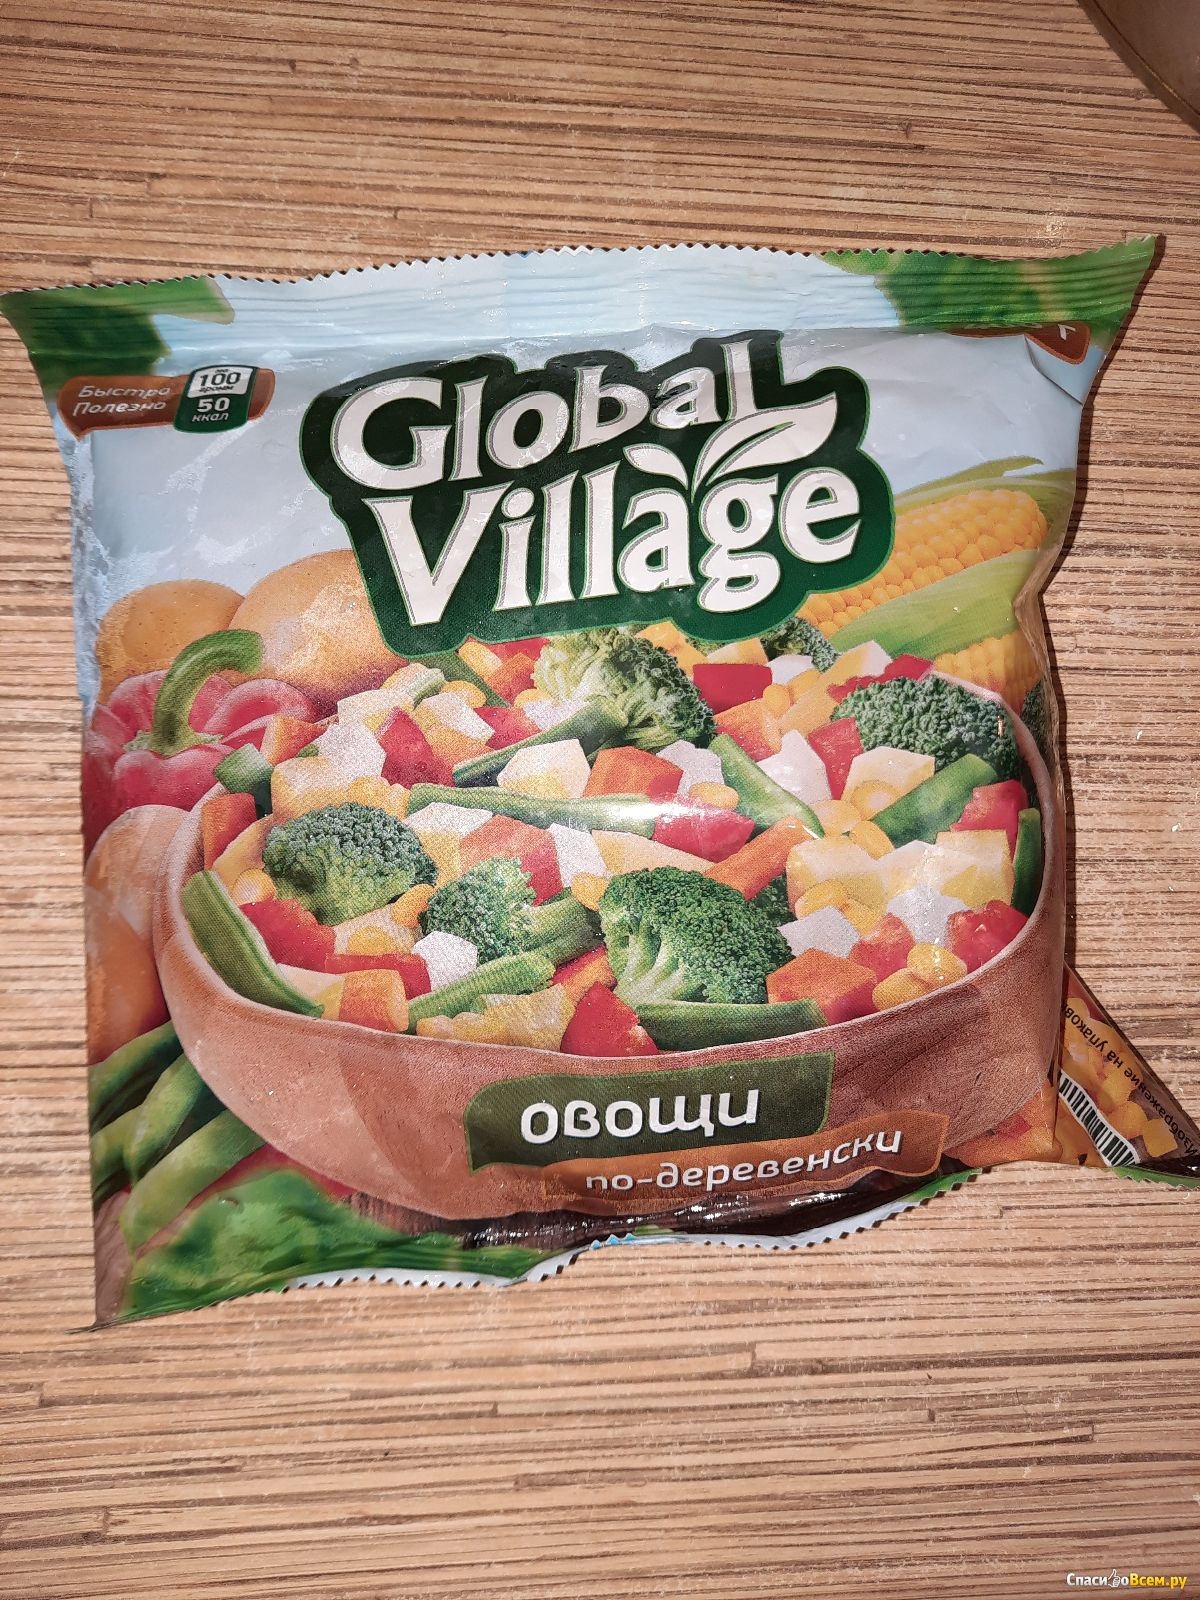 Global village суп. Смесь овощей Глобал Вилладж. Овощная смесь Глобал Виладж. Глобал Вилладж овощи замороженные. Овощная смесь замороженная Global Village.